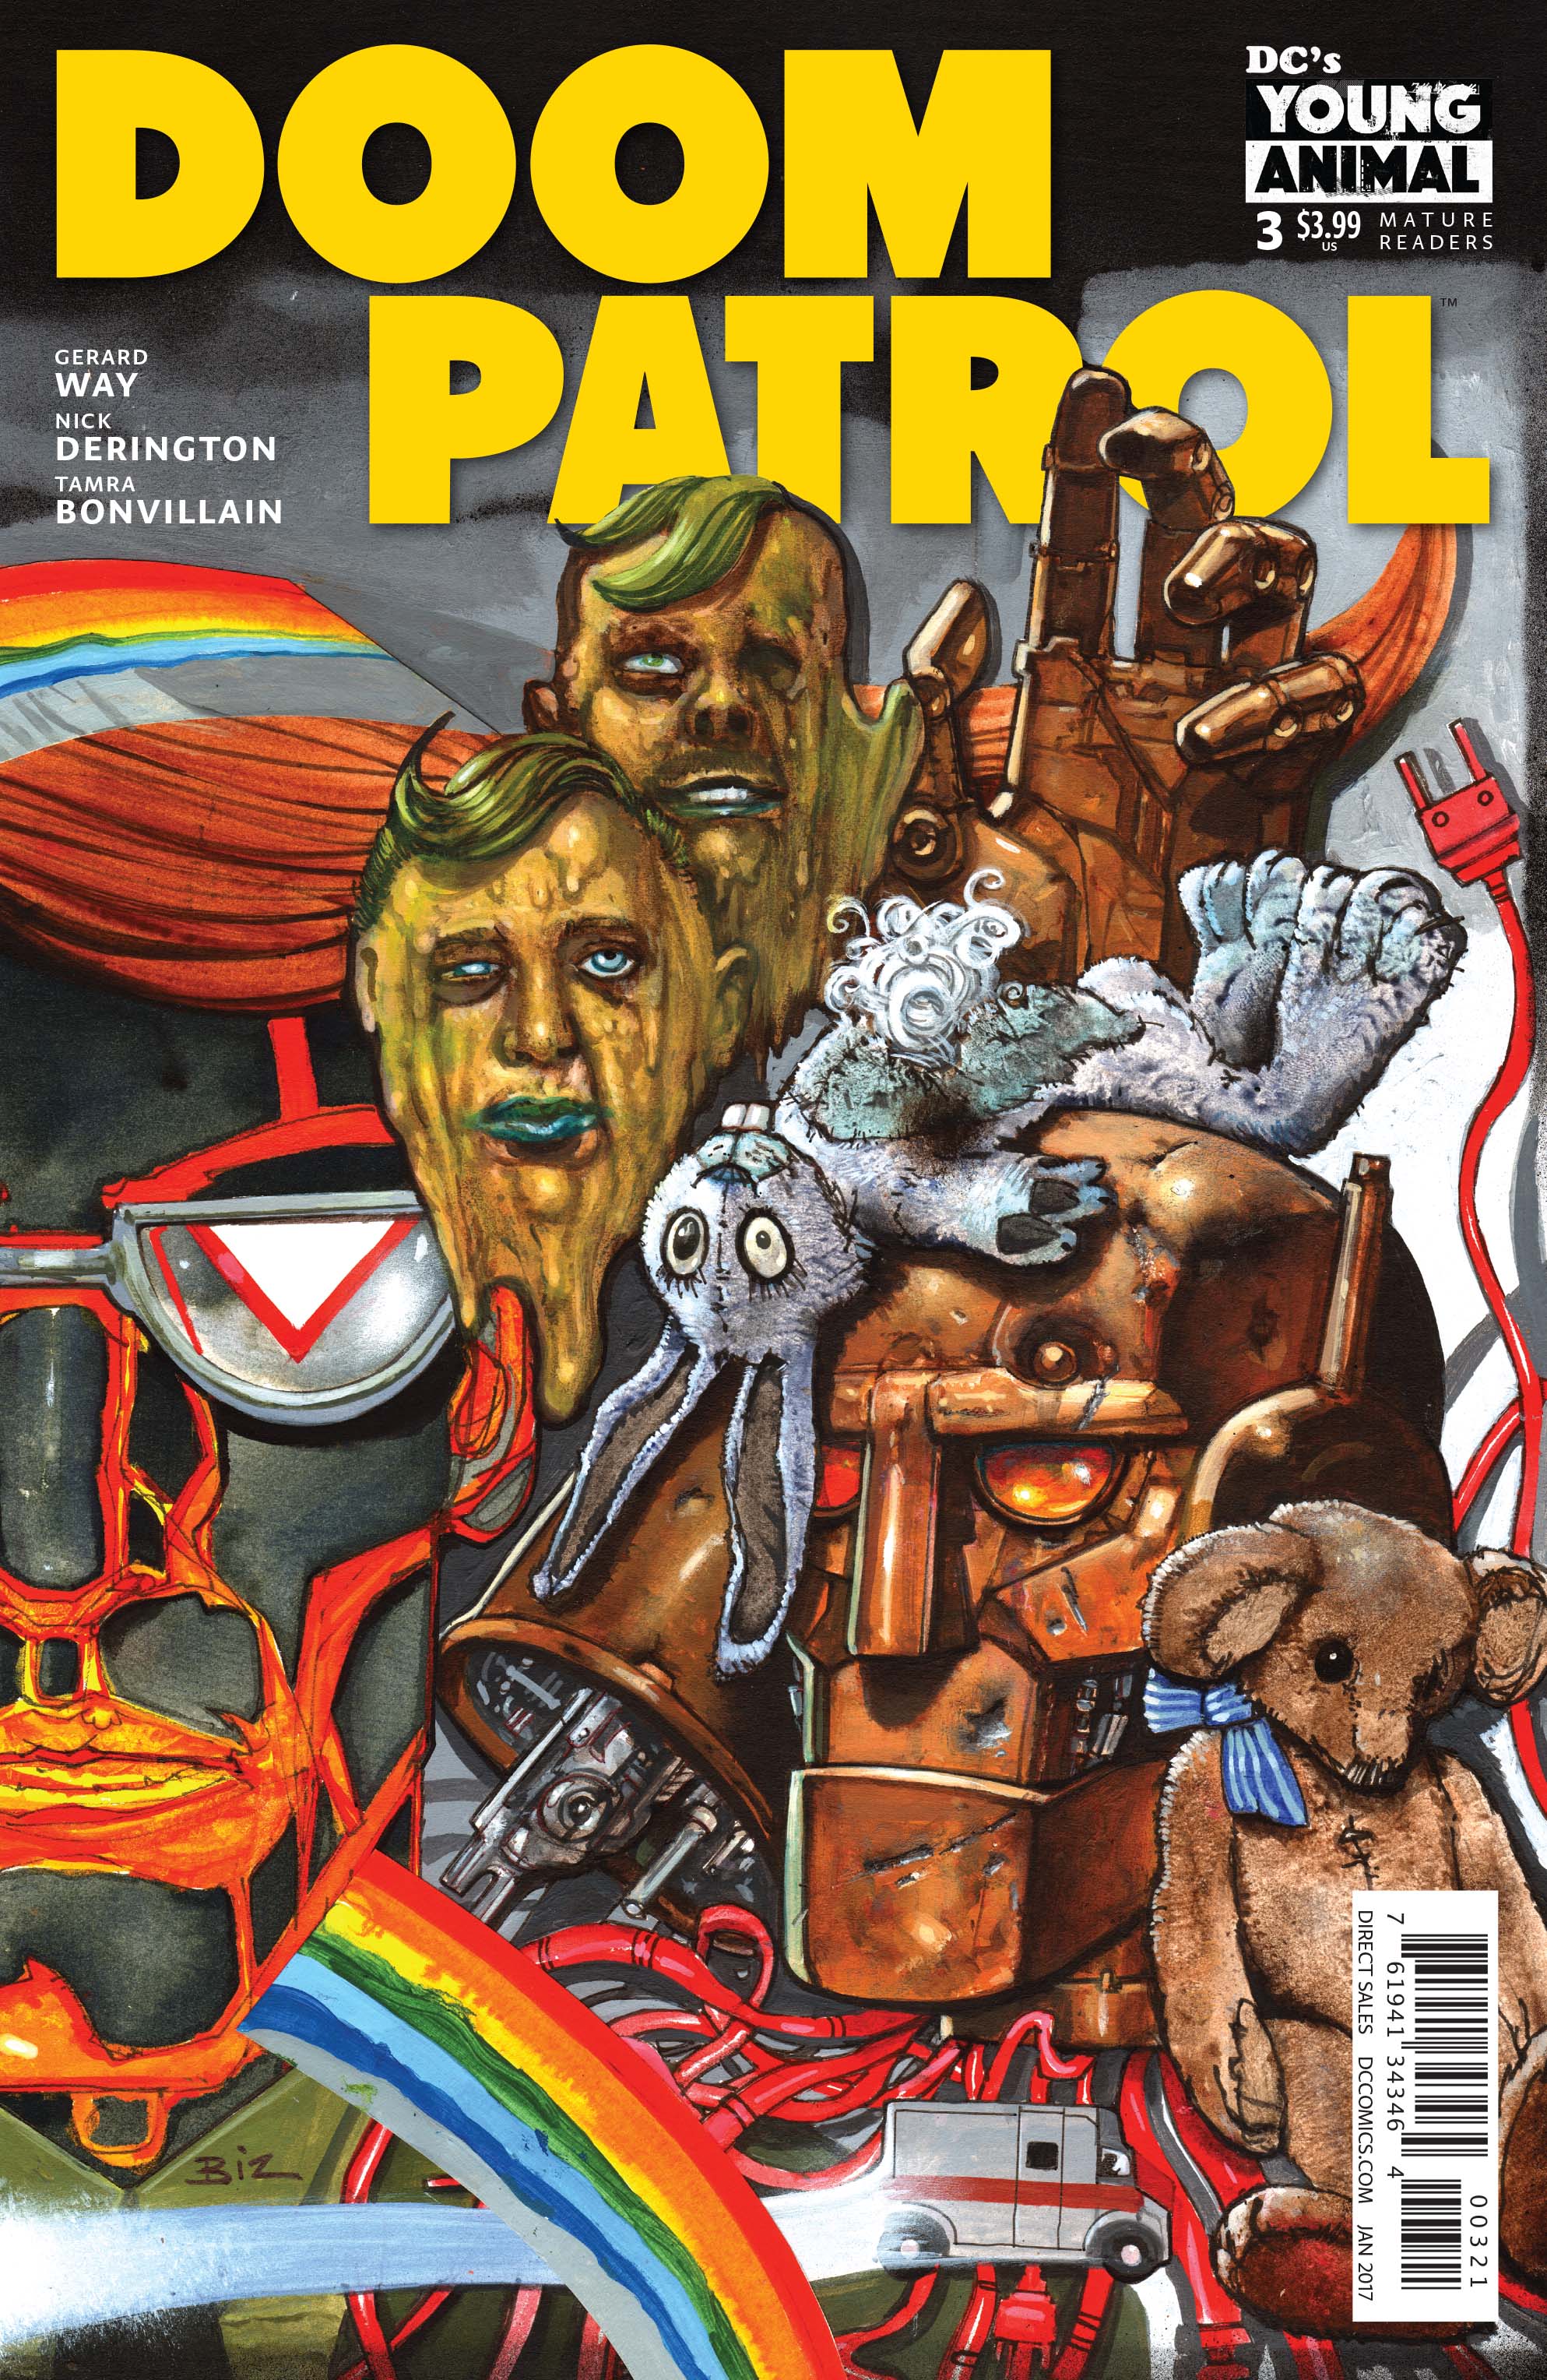 Doom Patrol #3 Review